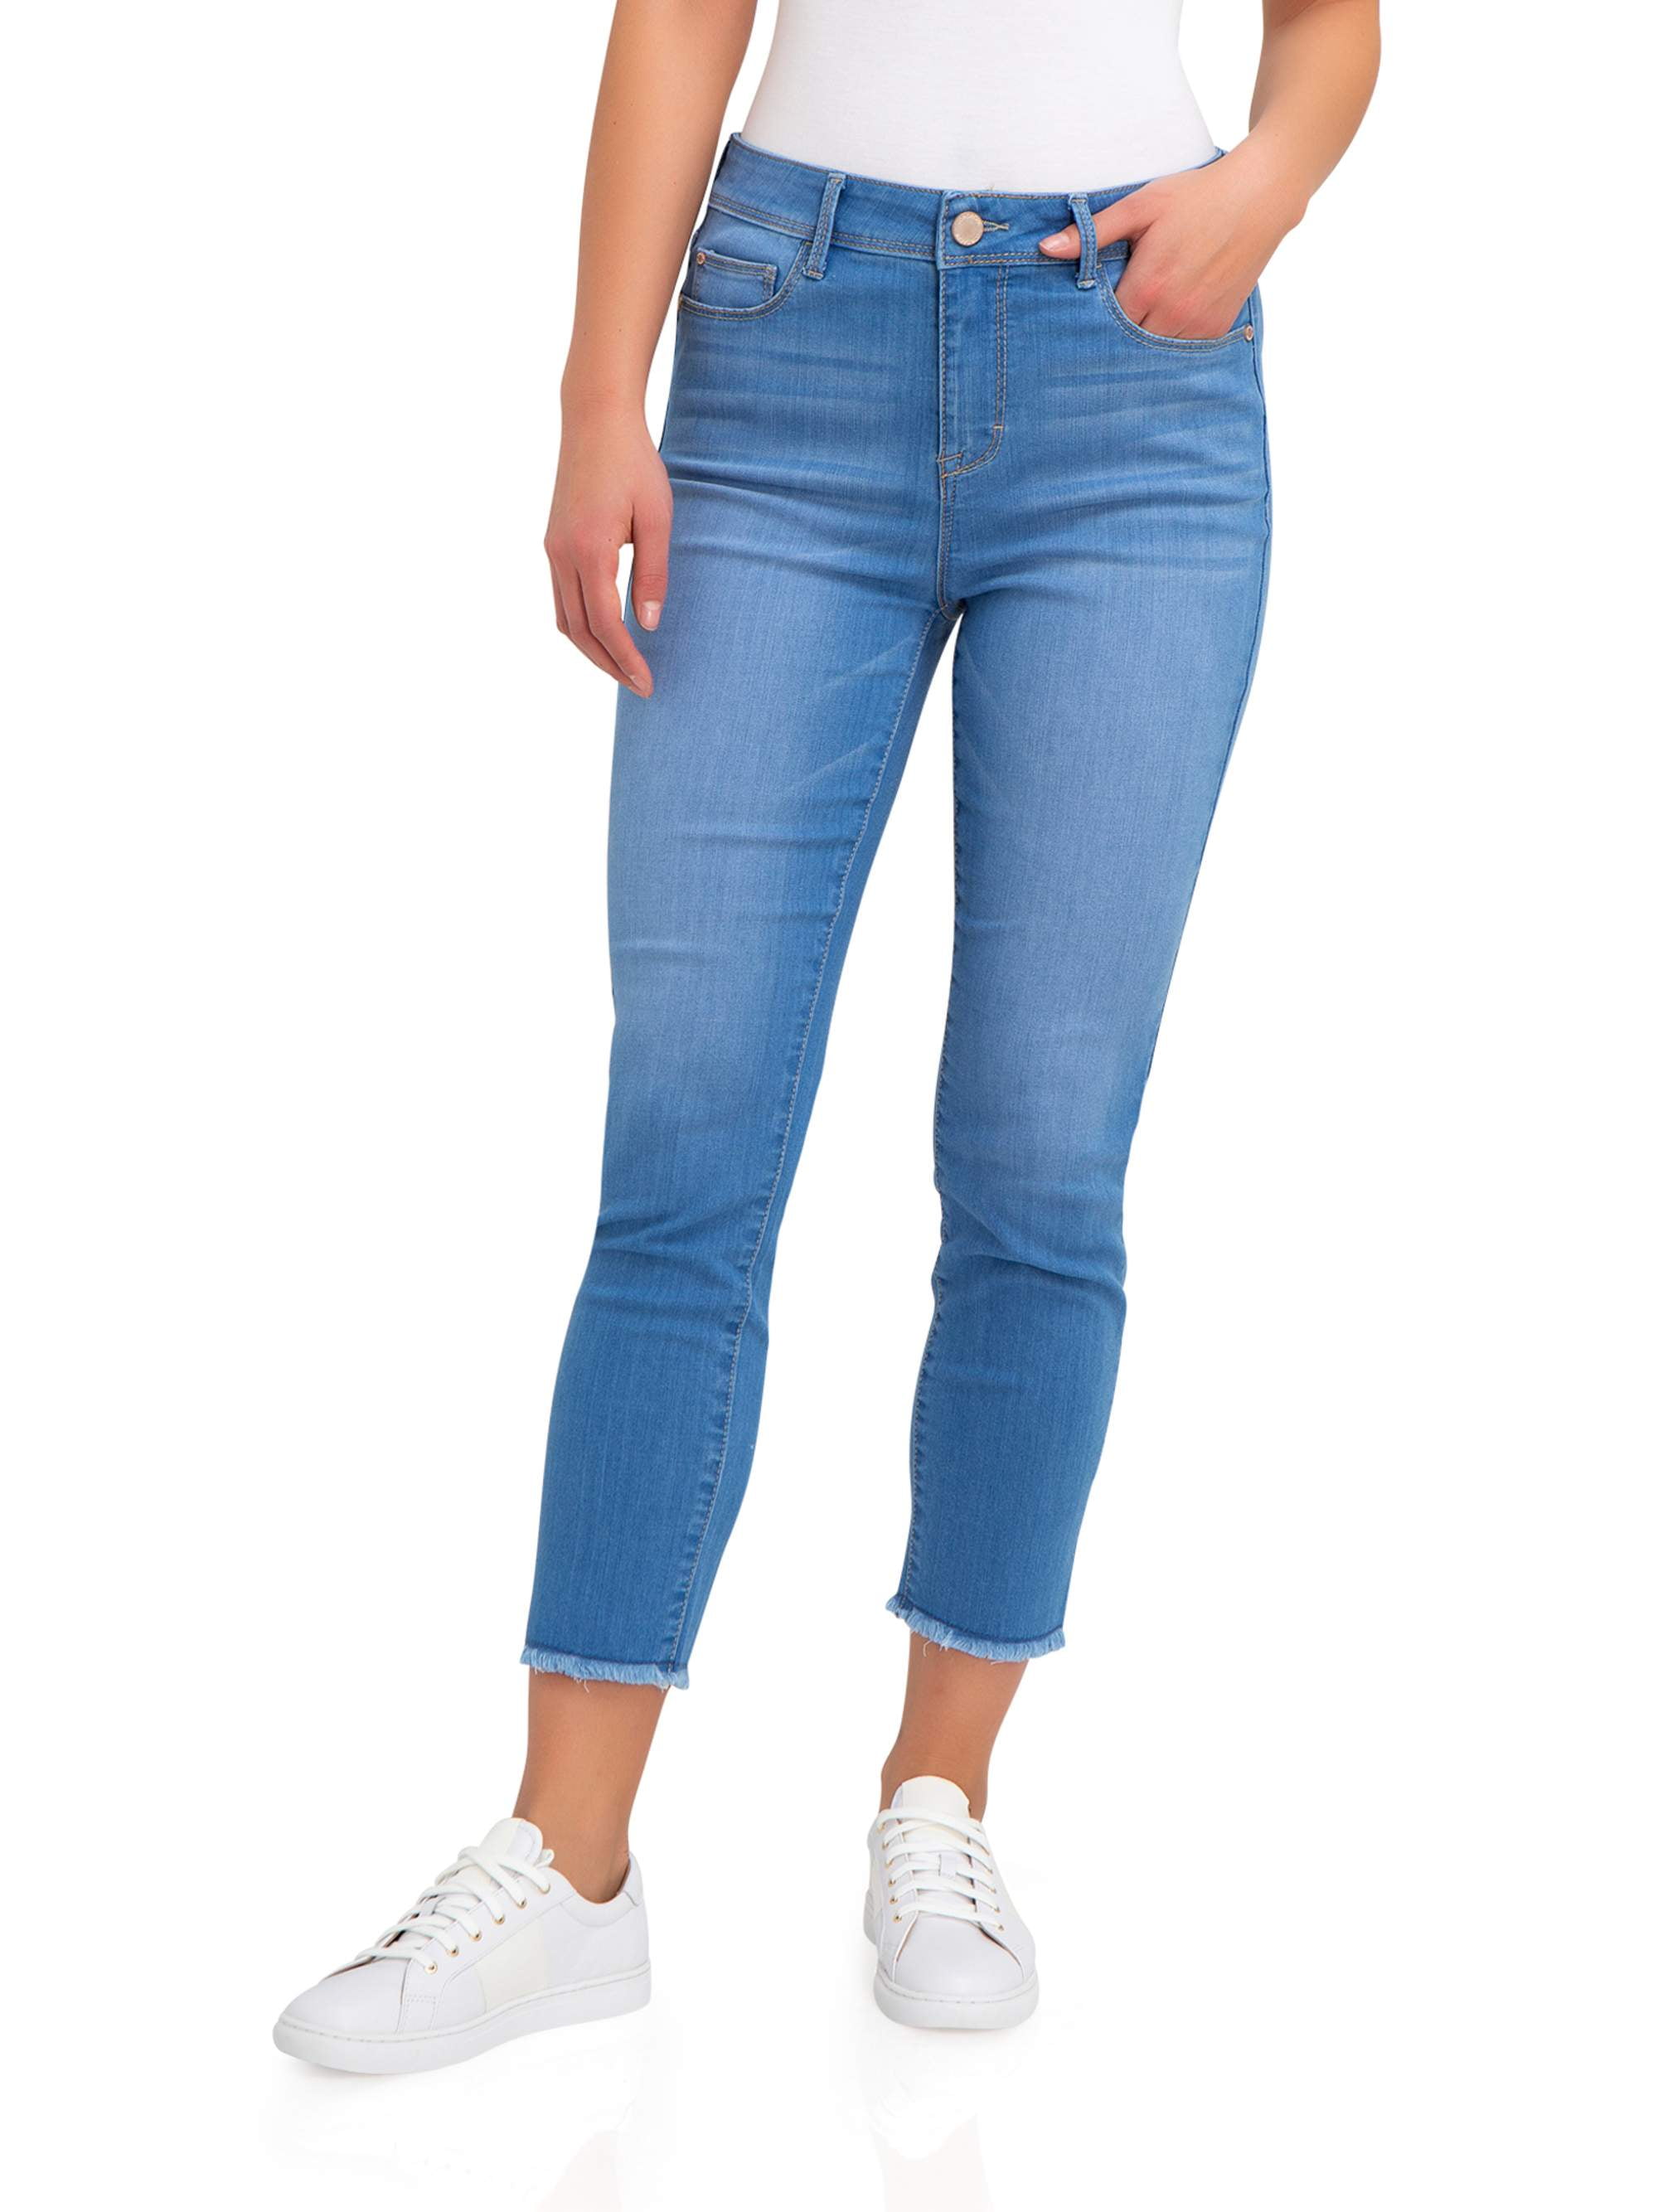 Jordache - Women's High Rise Cropped Skinny Jeans - Walmart.com ...